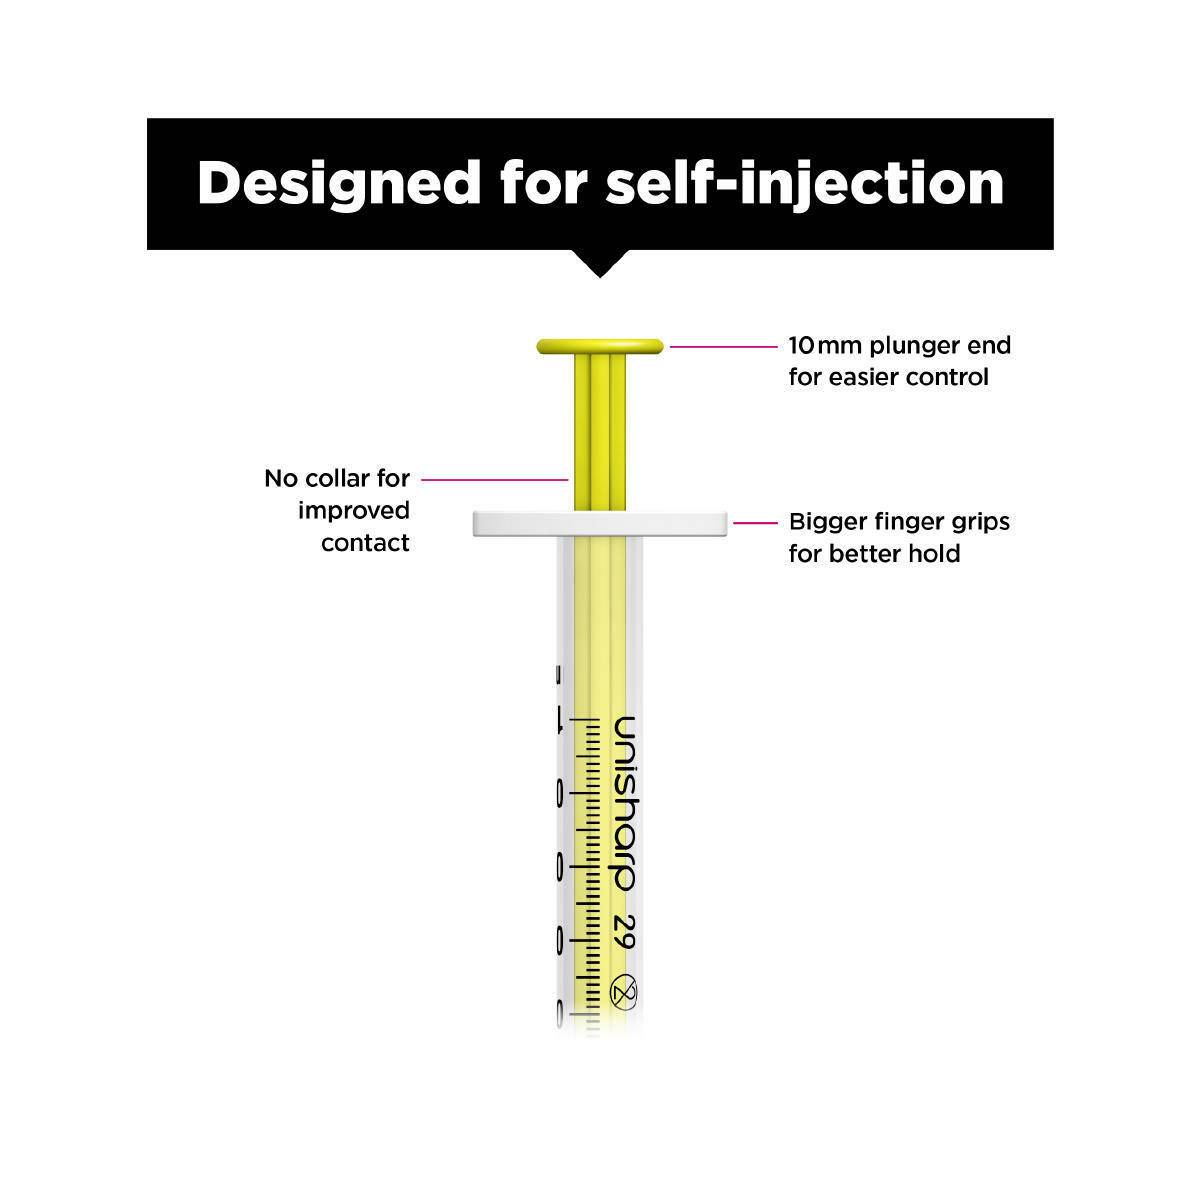 1ml 0.5 inch 29g Yellow Unisharp Syringe and Needle u100 - UKMEDI